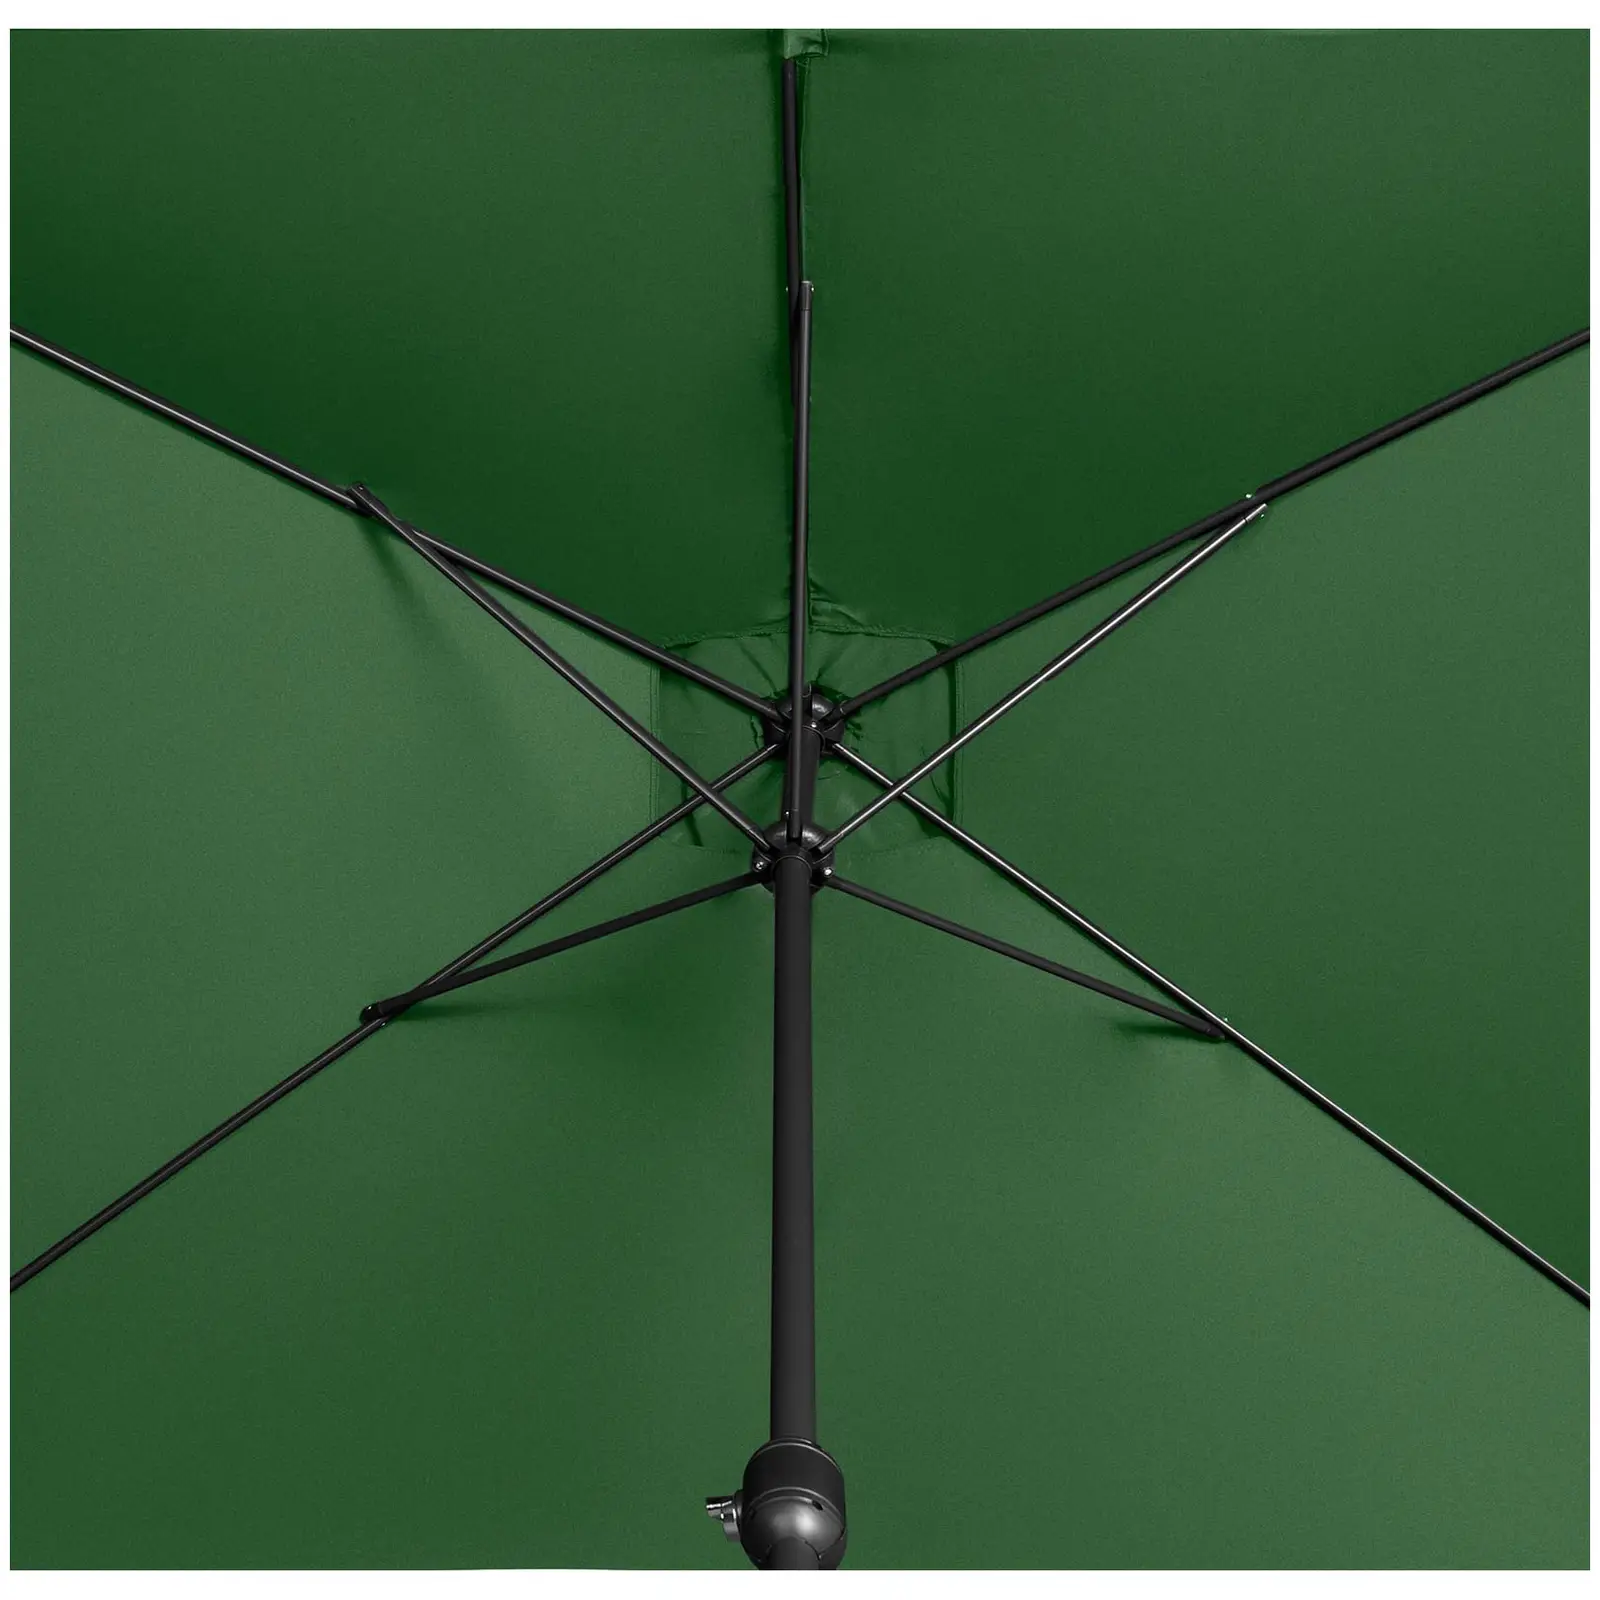 Sonnenschirm groß - grün - rechteckig - 200 x 300 cm